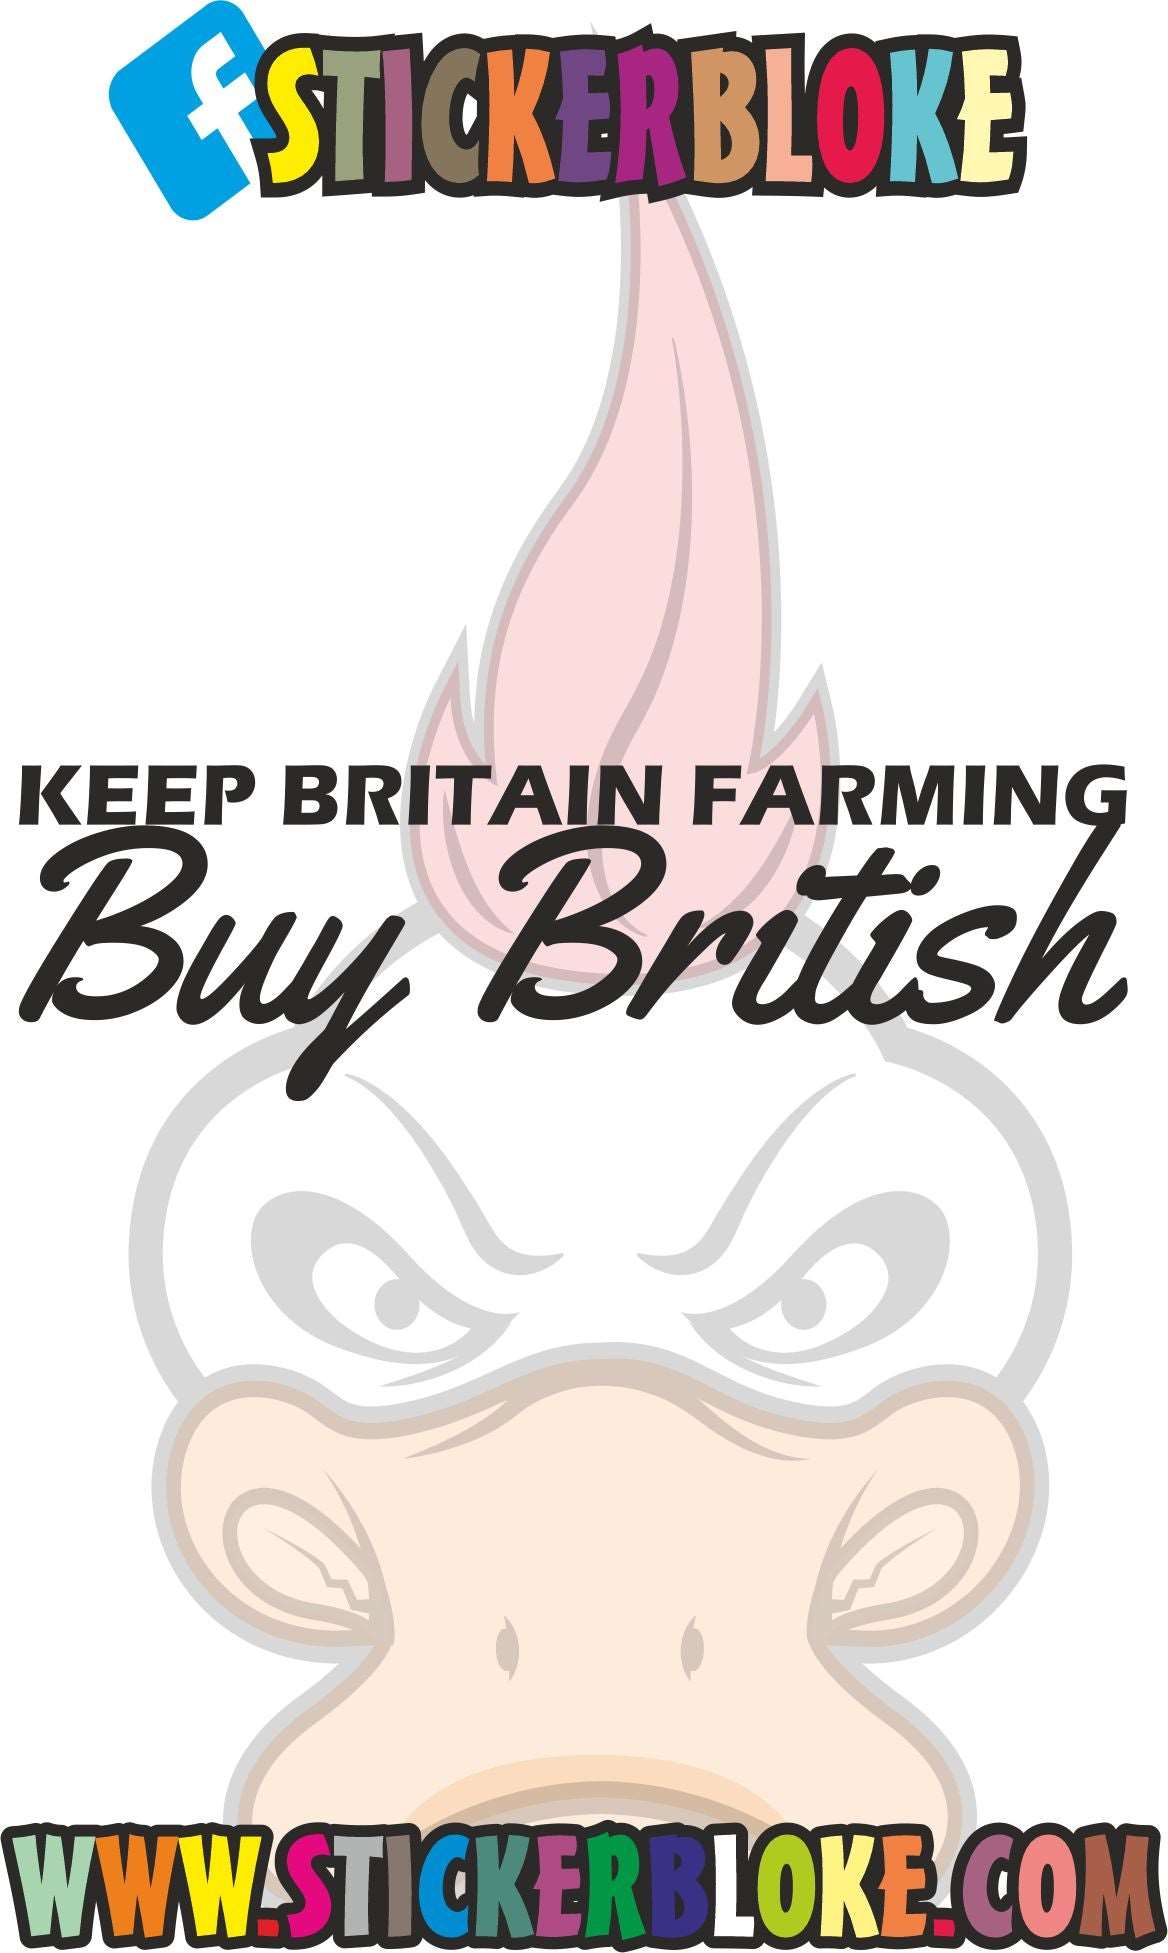 KEEP BRITAIN FARMING BUY BRITISH